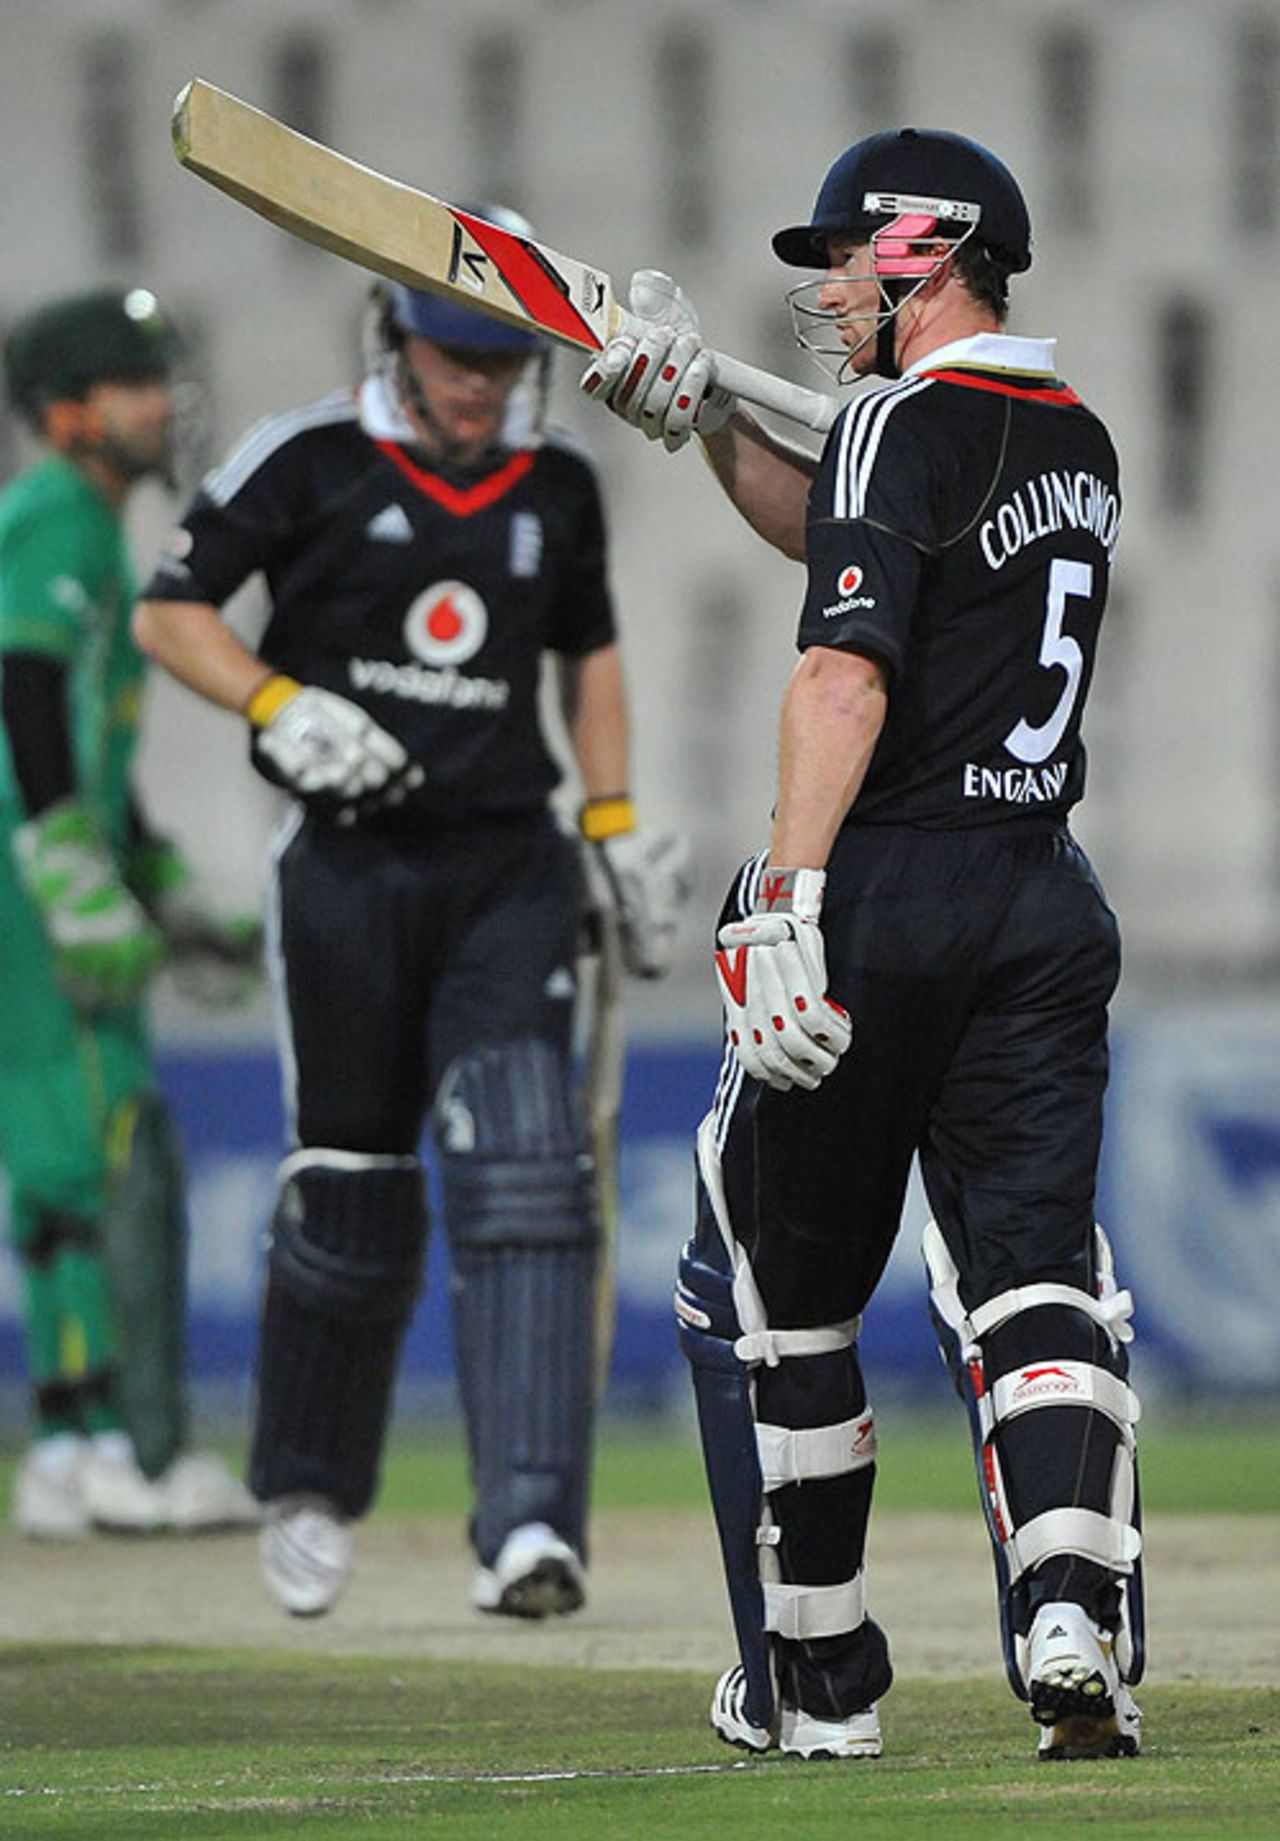 Paul Collingwood scored a 27-ball half-century to power England's innings, South Africa v England, 1st Twenty20, Johannesburg, November 13, 2009